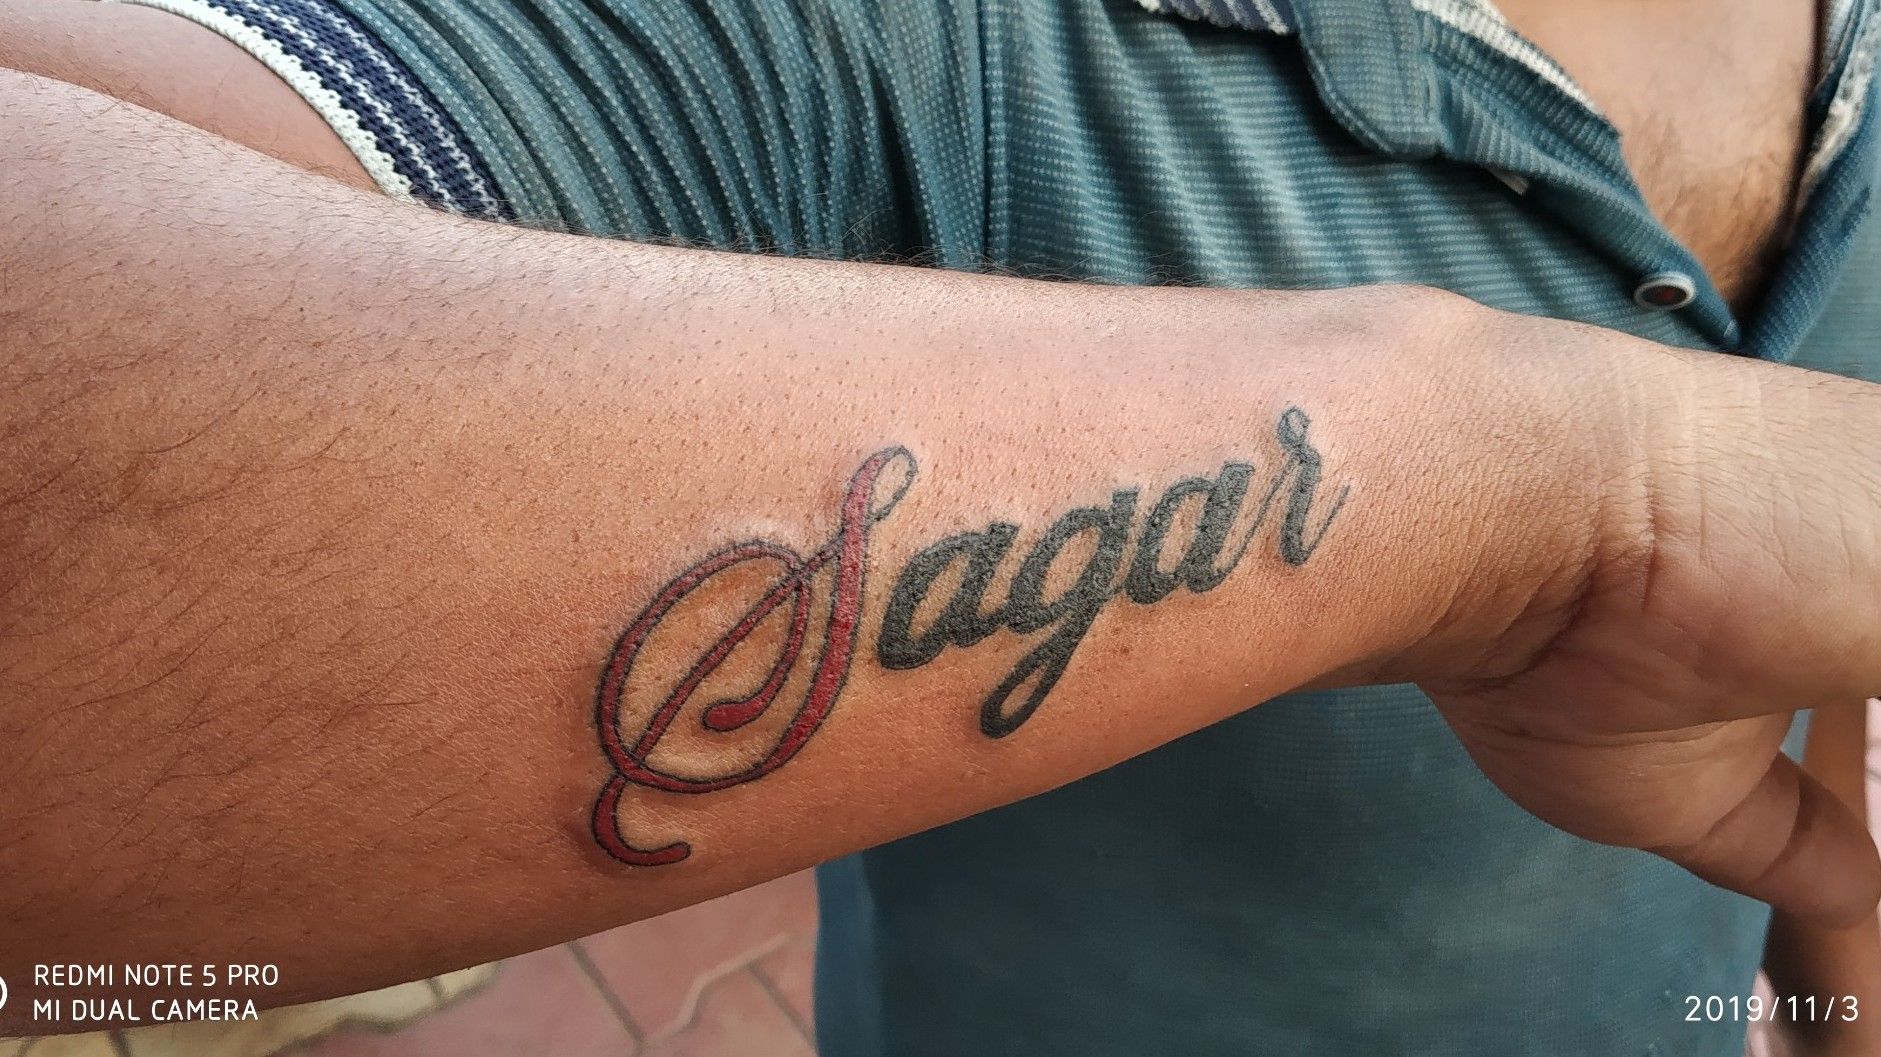 Tattoo uploaded by Shashi Garade • #sagar • Tattoodo